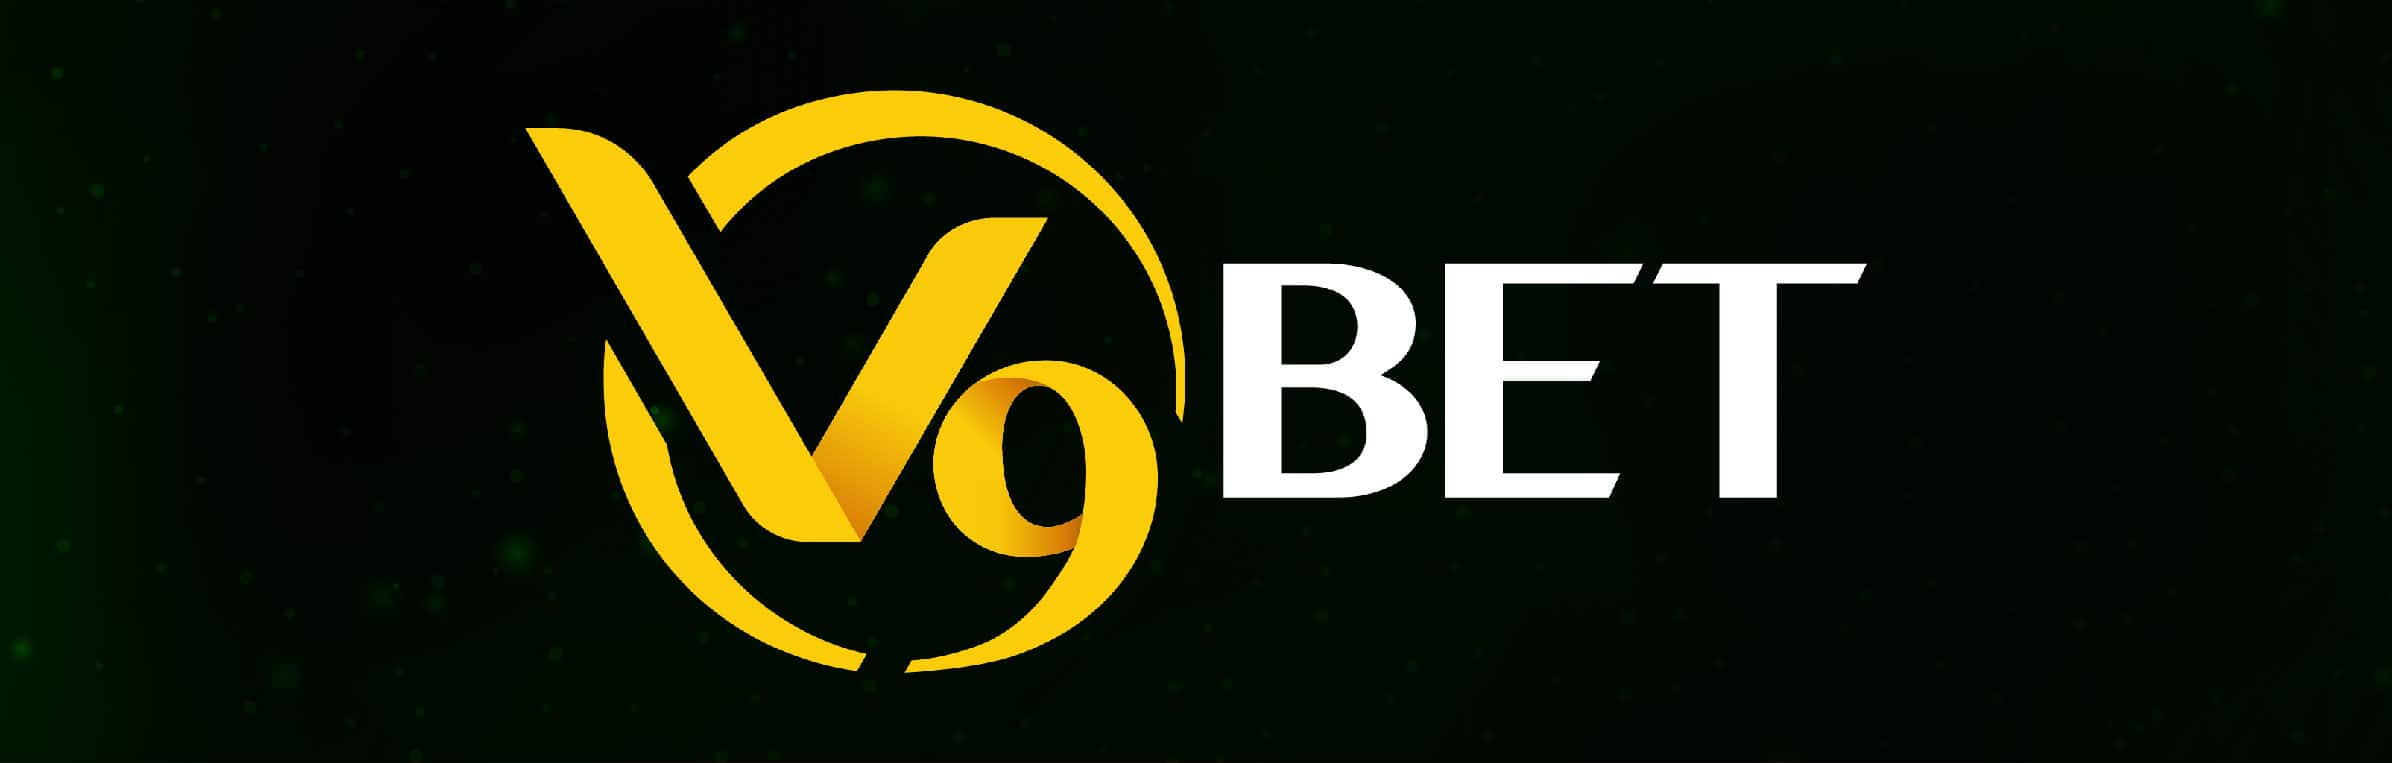 logo-v9bet-01.jpg